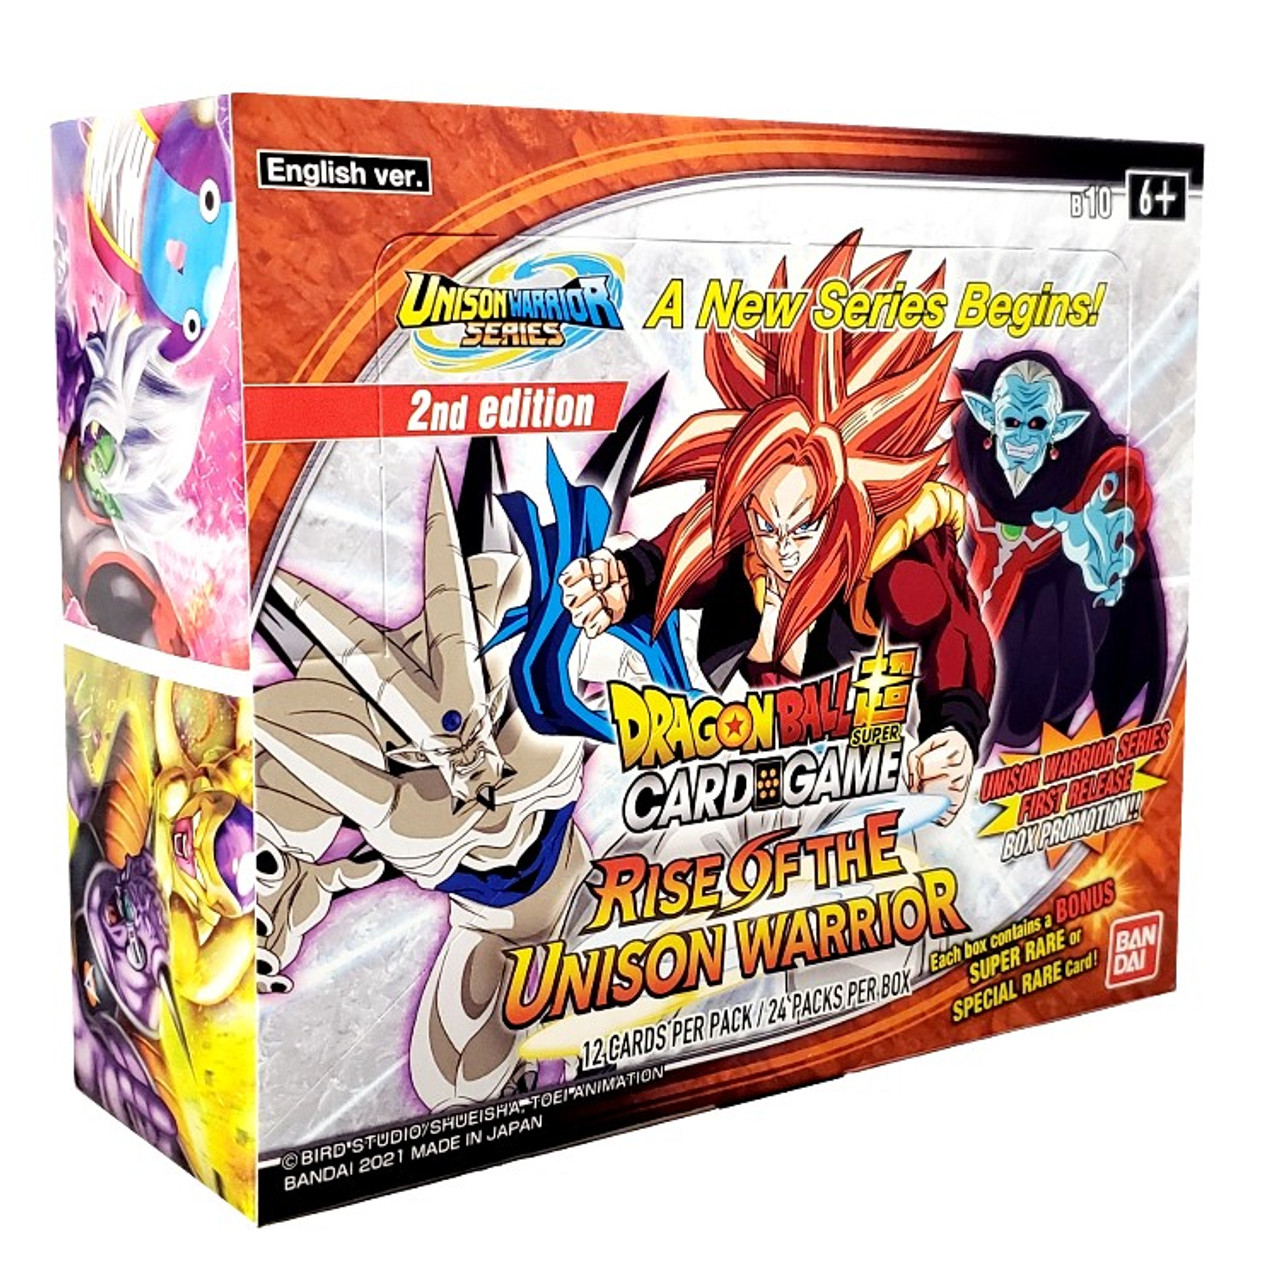 Dragon Ball Super Ultimate Box Set for sale online